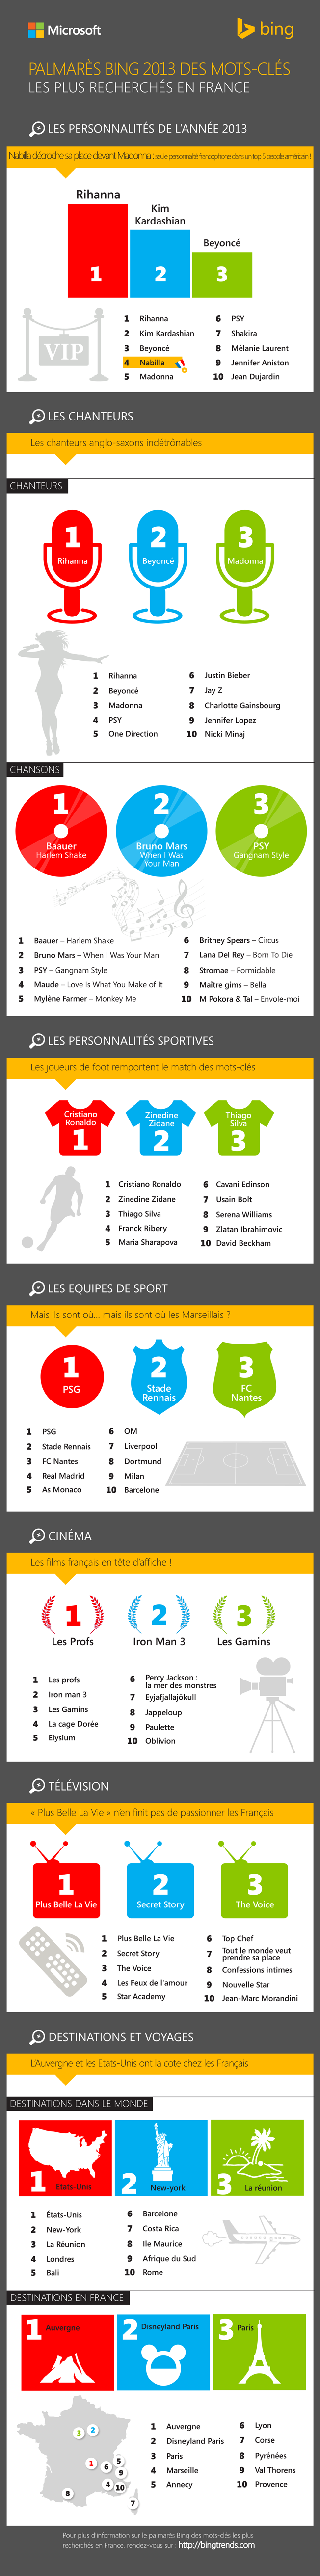 infographie-bing-mot-cle-france-2013